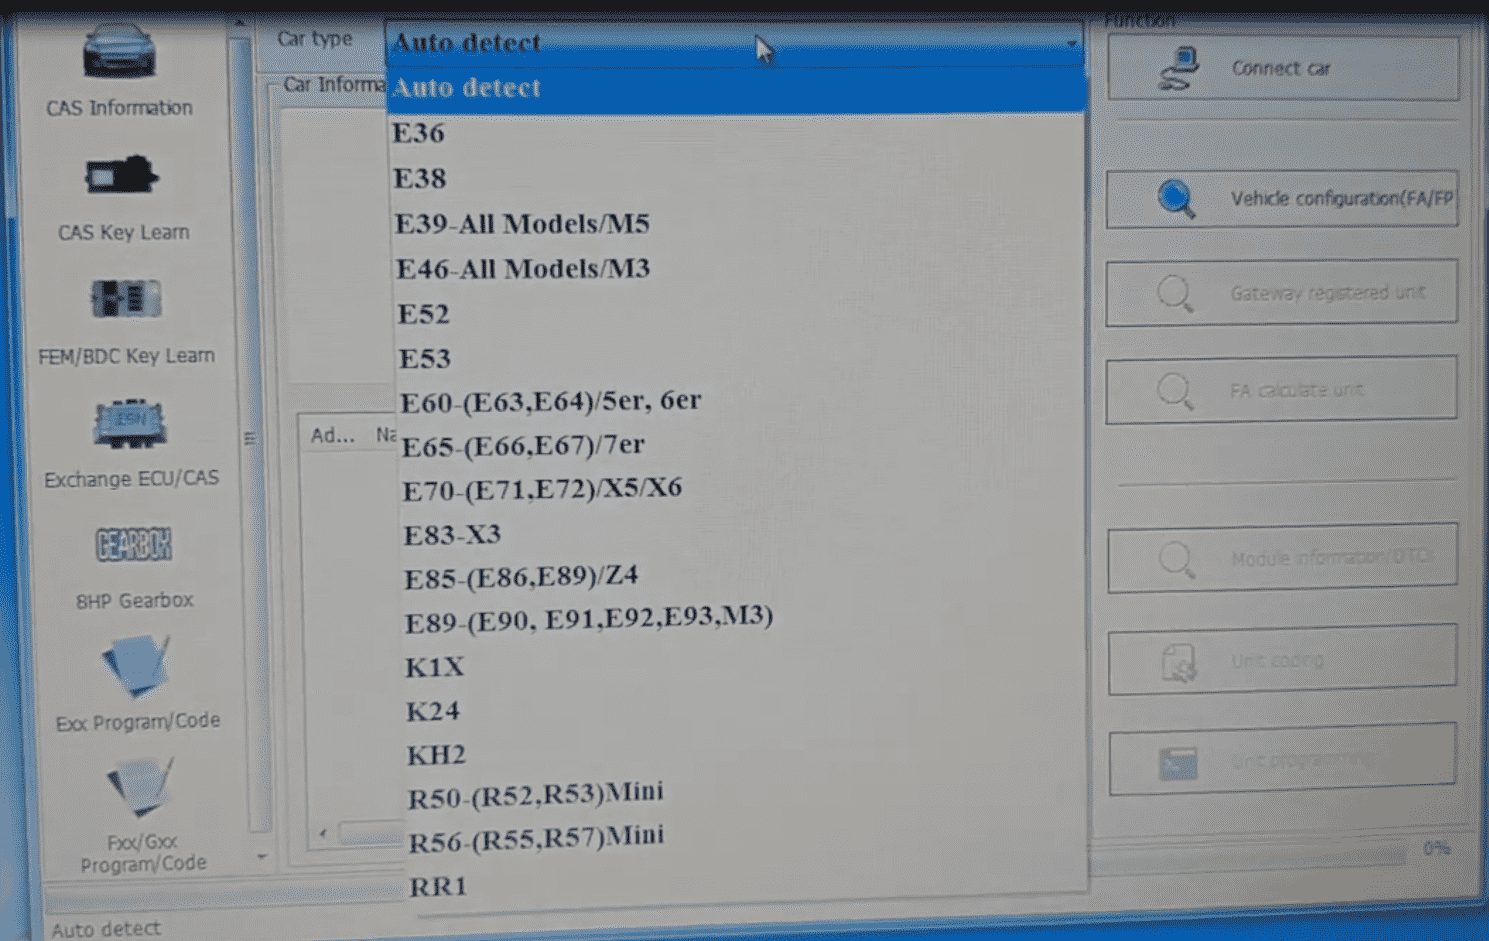 Xhorse VVDI BMW V1.4.6 Diagnostic Coding and Programming Tool Free MINI Key Tool Xhorse VVDI BMW V1.4.6 Diagnostic Coding and Programming Tool vvdi bmw,xhorse vvdi,vvdm bmw diagnostic,vvdi bmw coding tool,vvdi programming tool